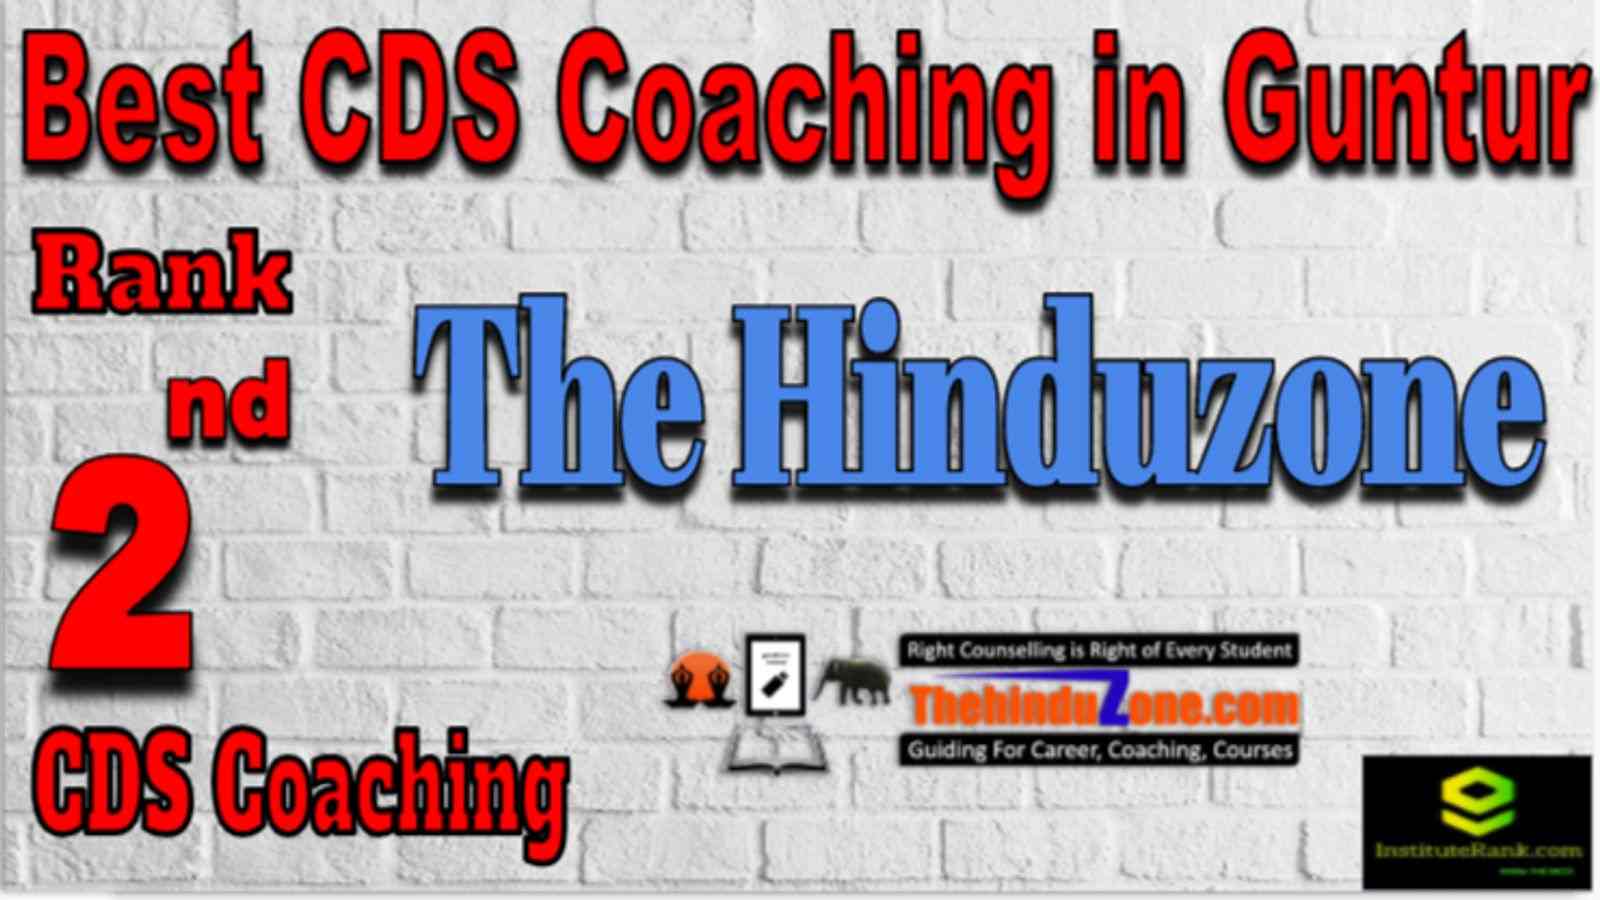 Rank 2 Best CDS Coaching in Guntur